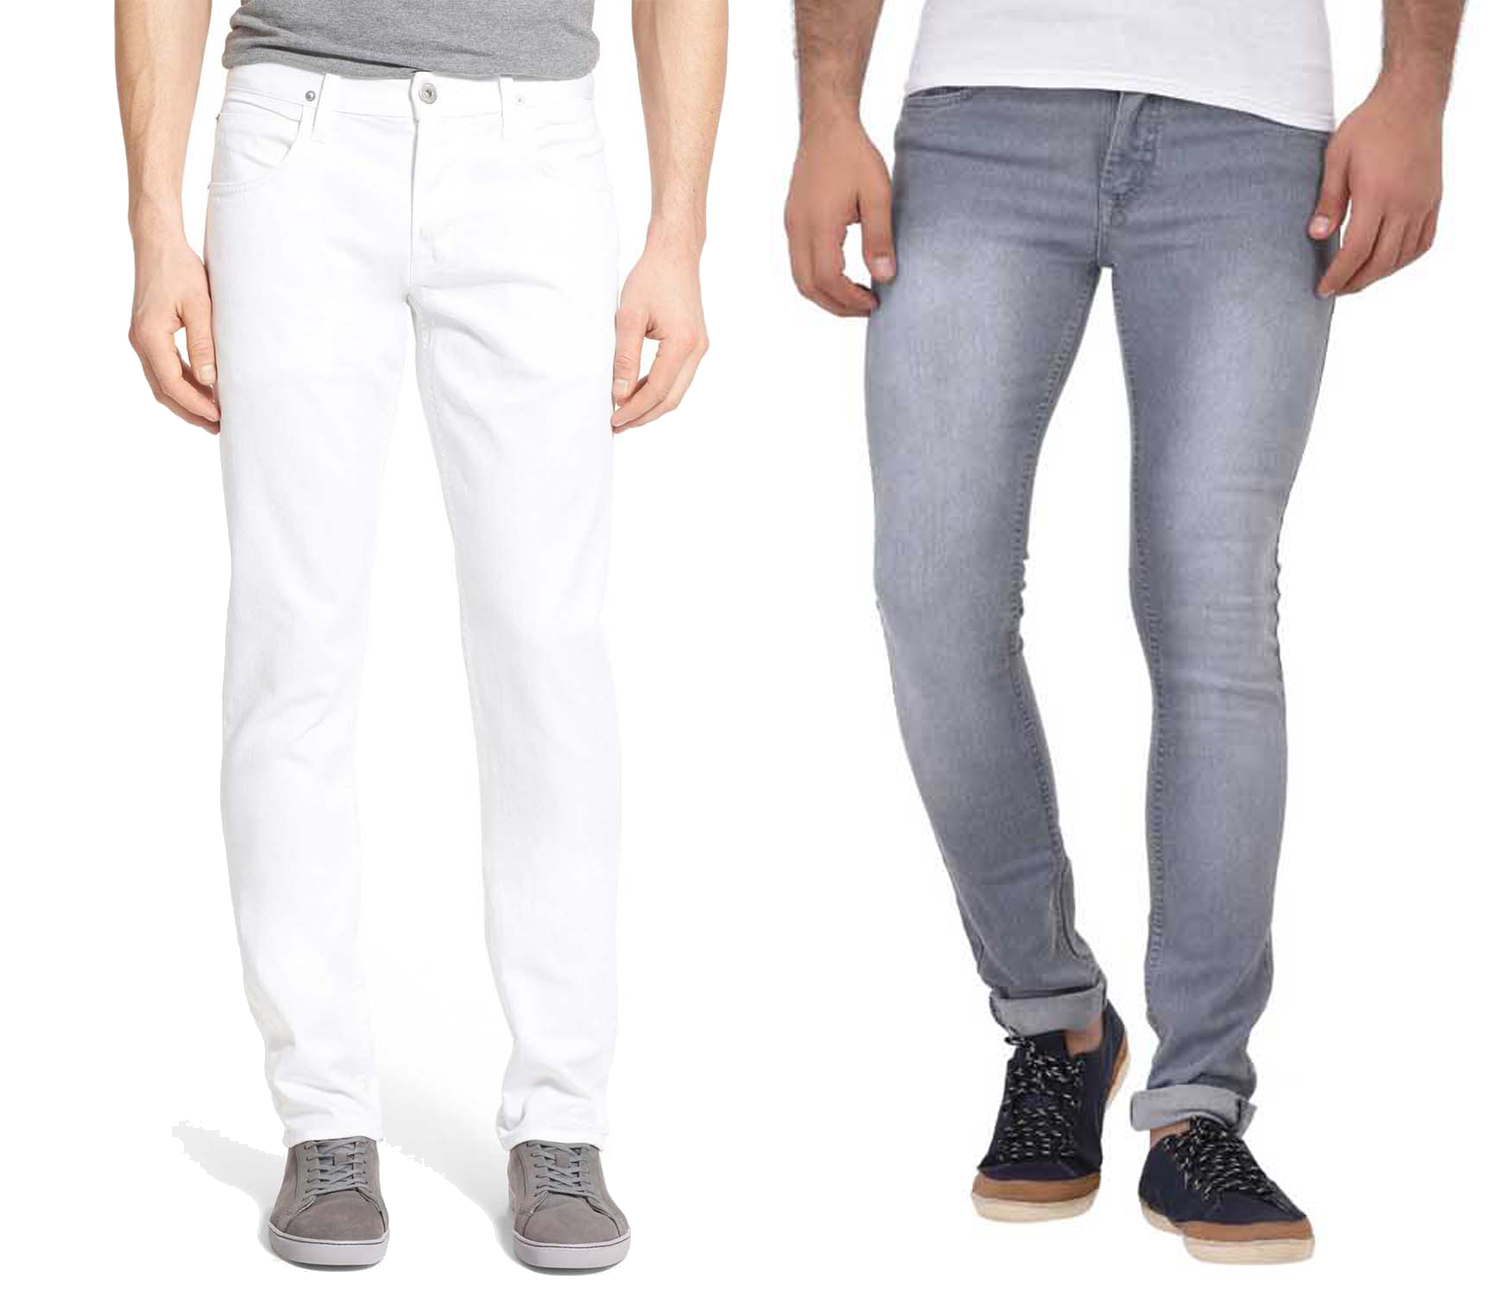 Buy Ansh Fashion Wear Men's Denim Jeans - Contemporary Regular Fit ...